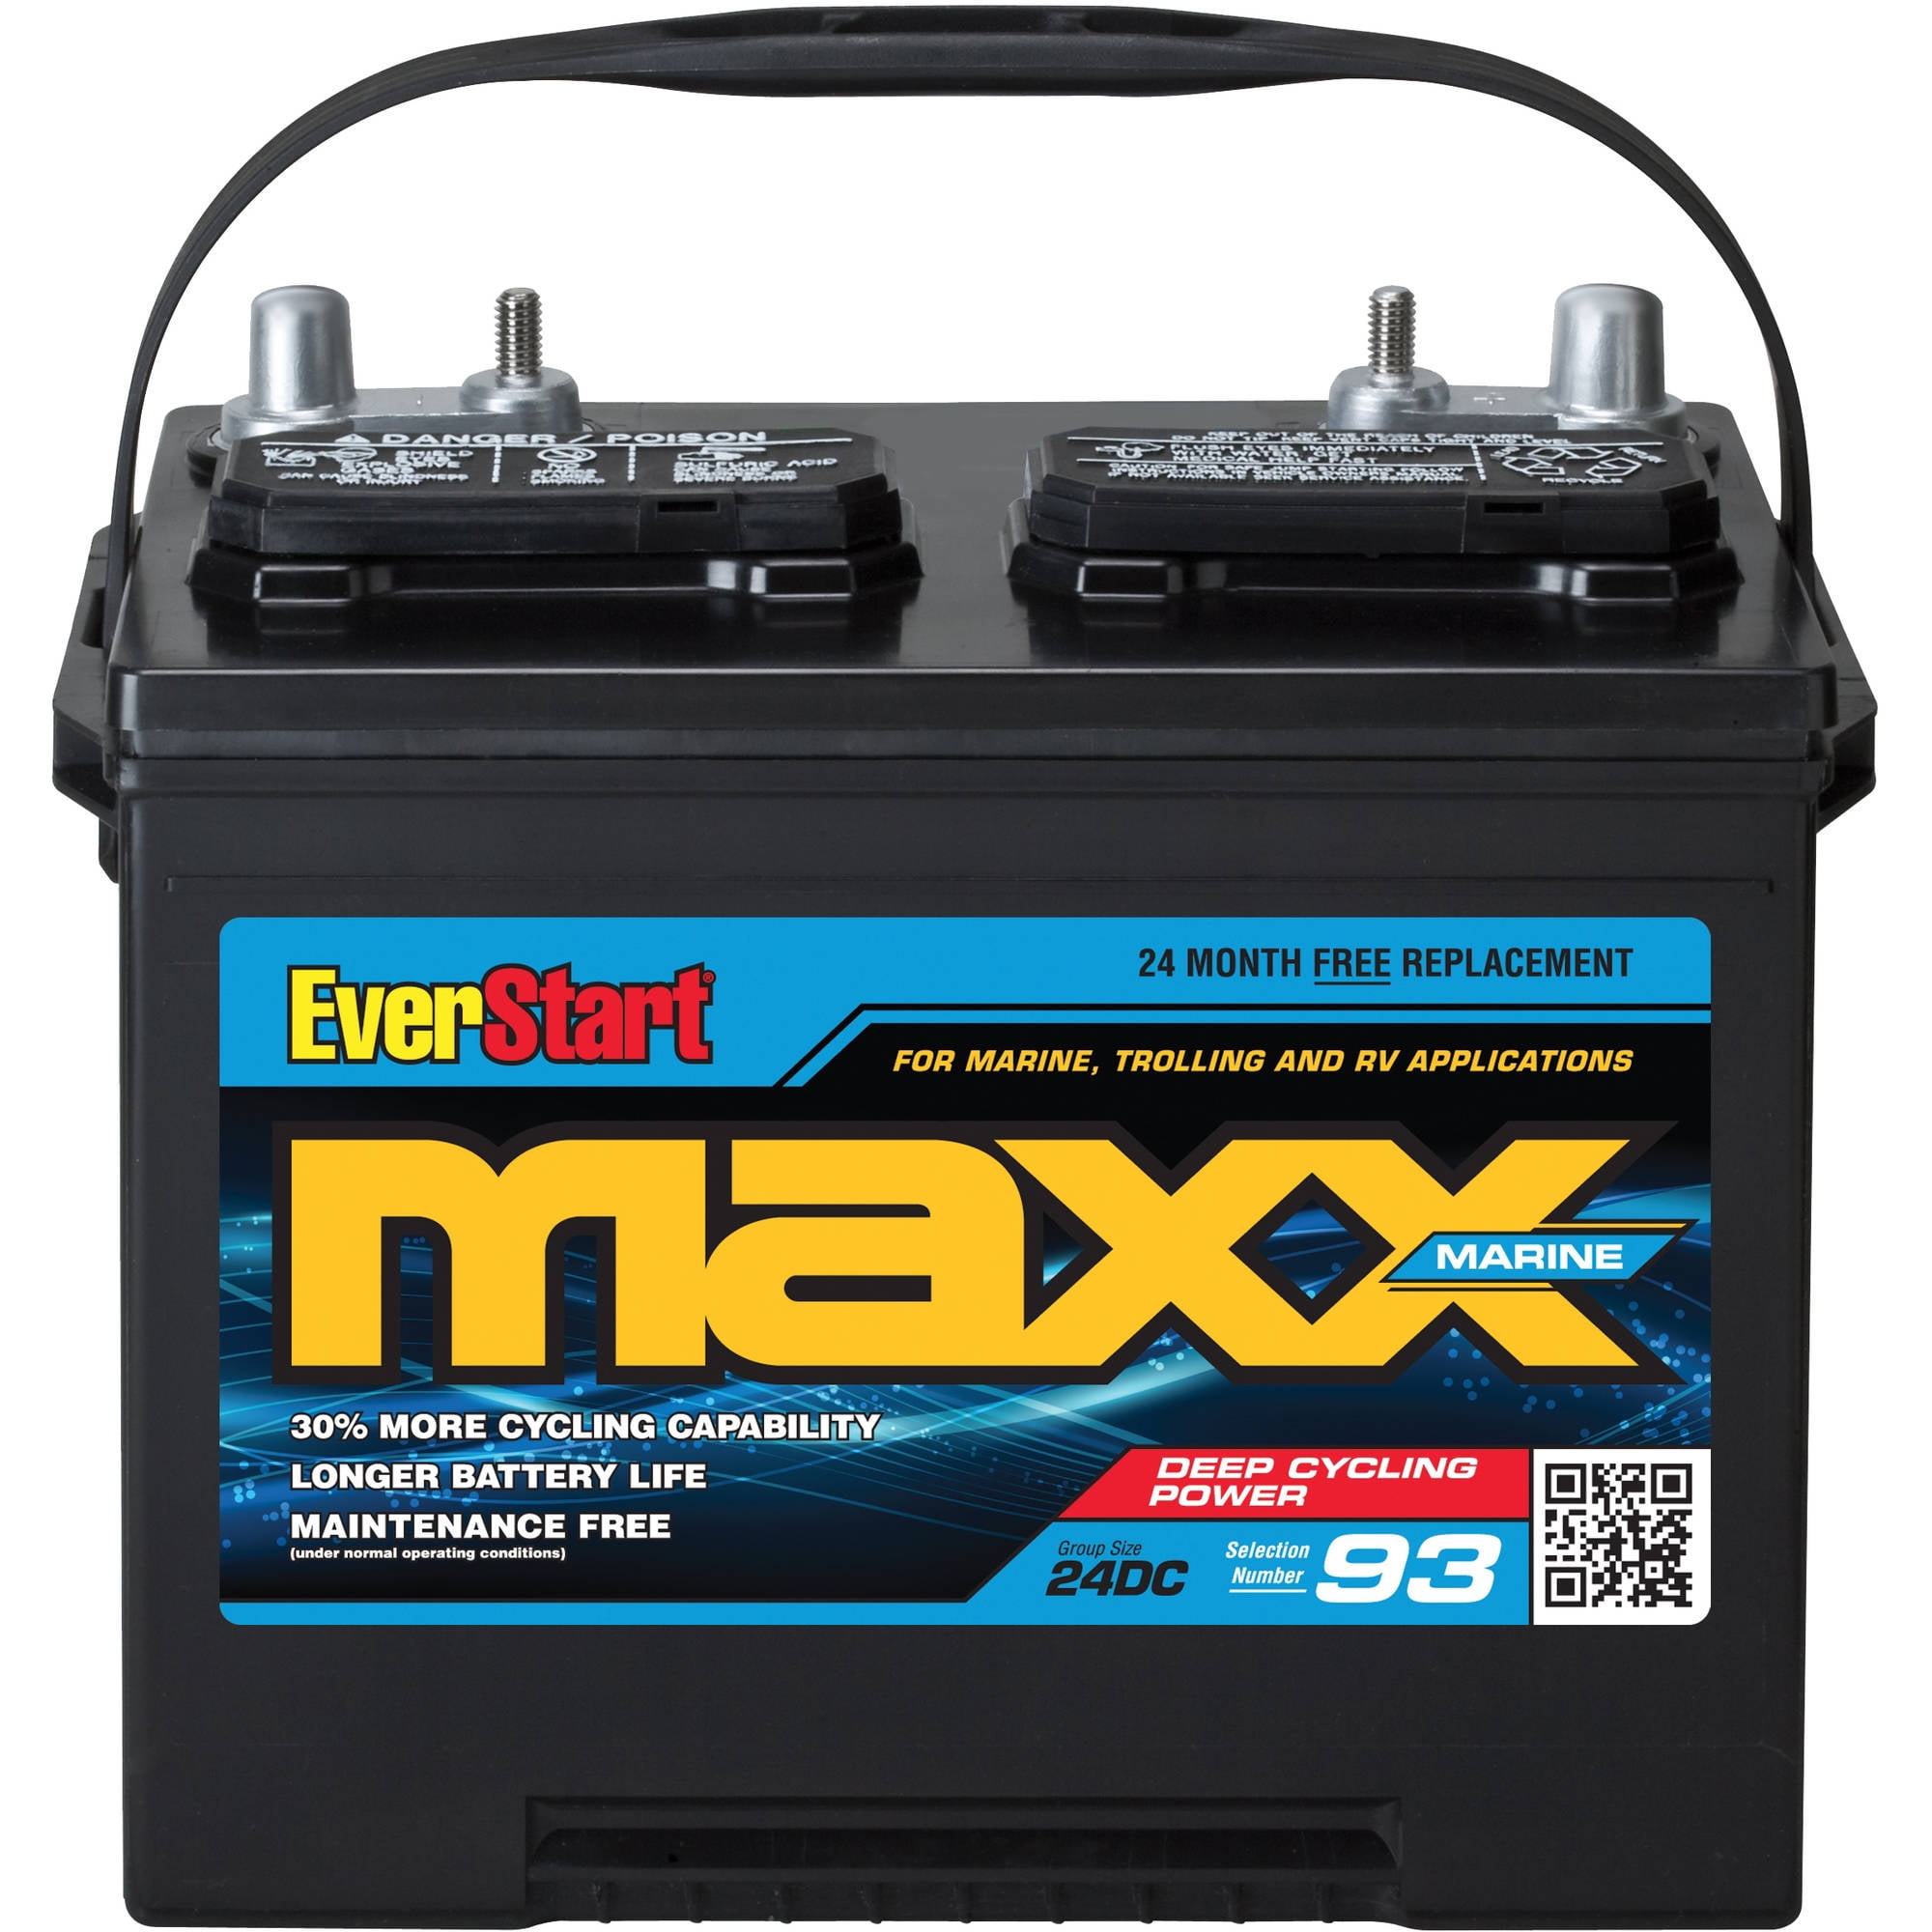 Everstart Maxx Lead Acid Marine Battery Group Size 24dc Walmart Com